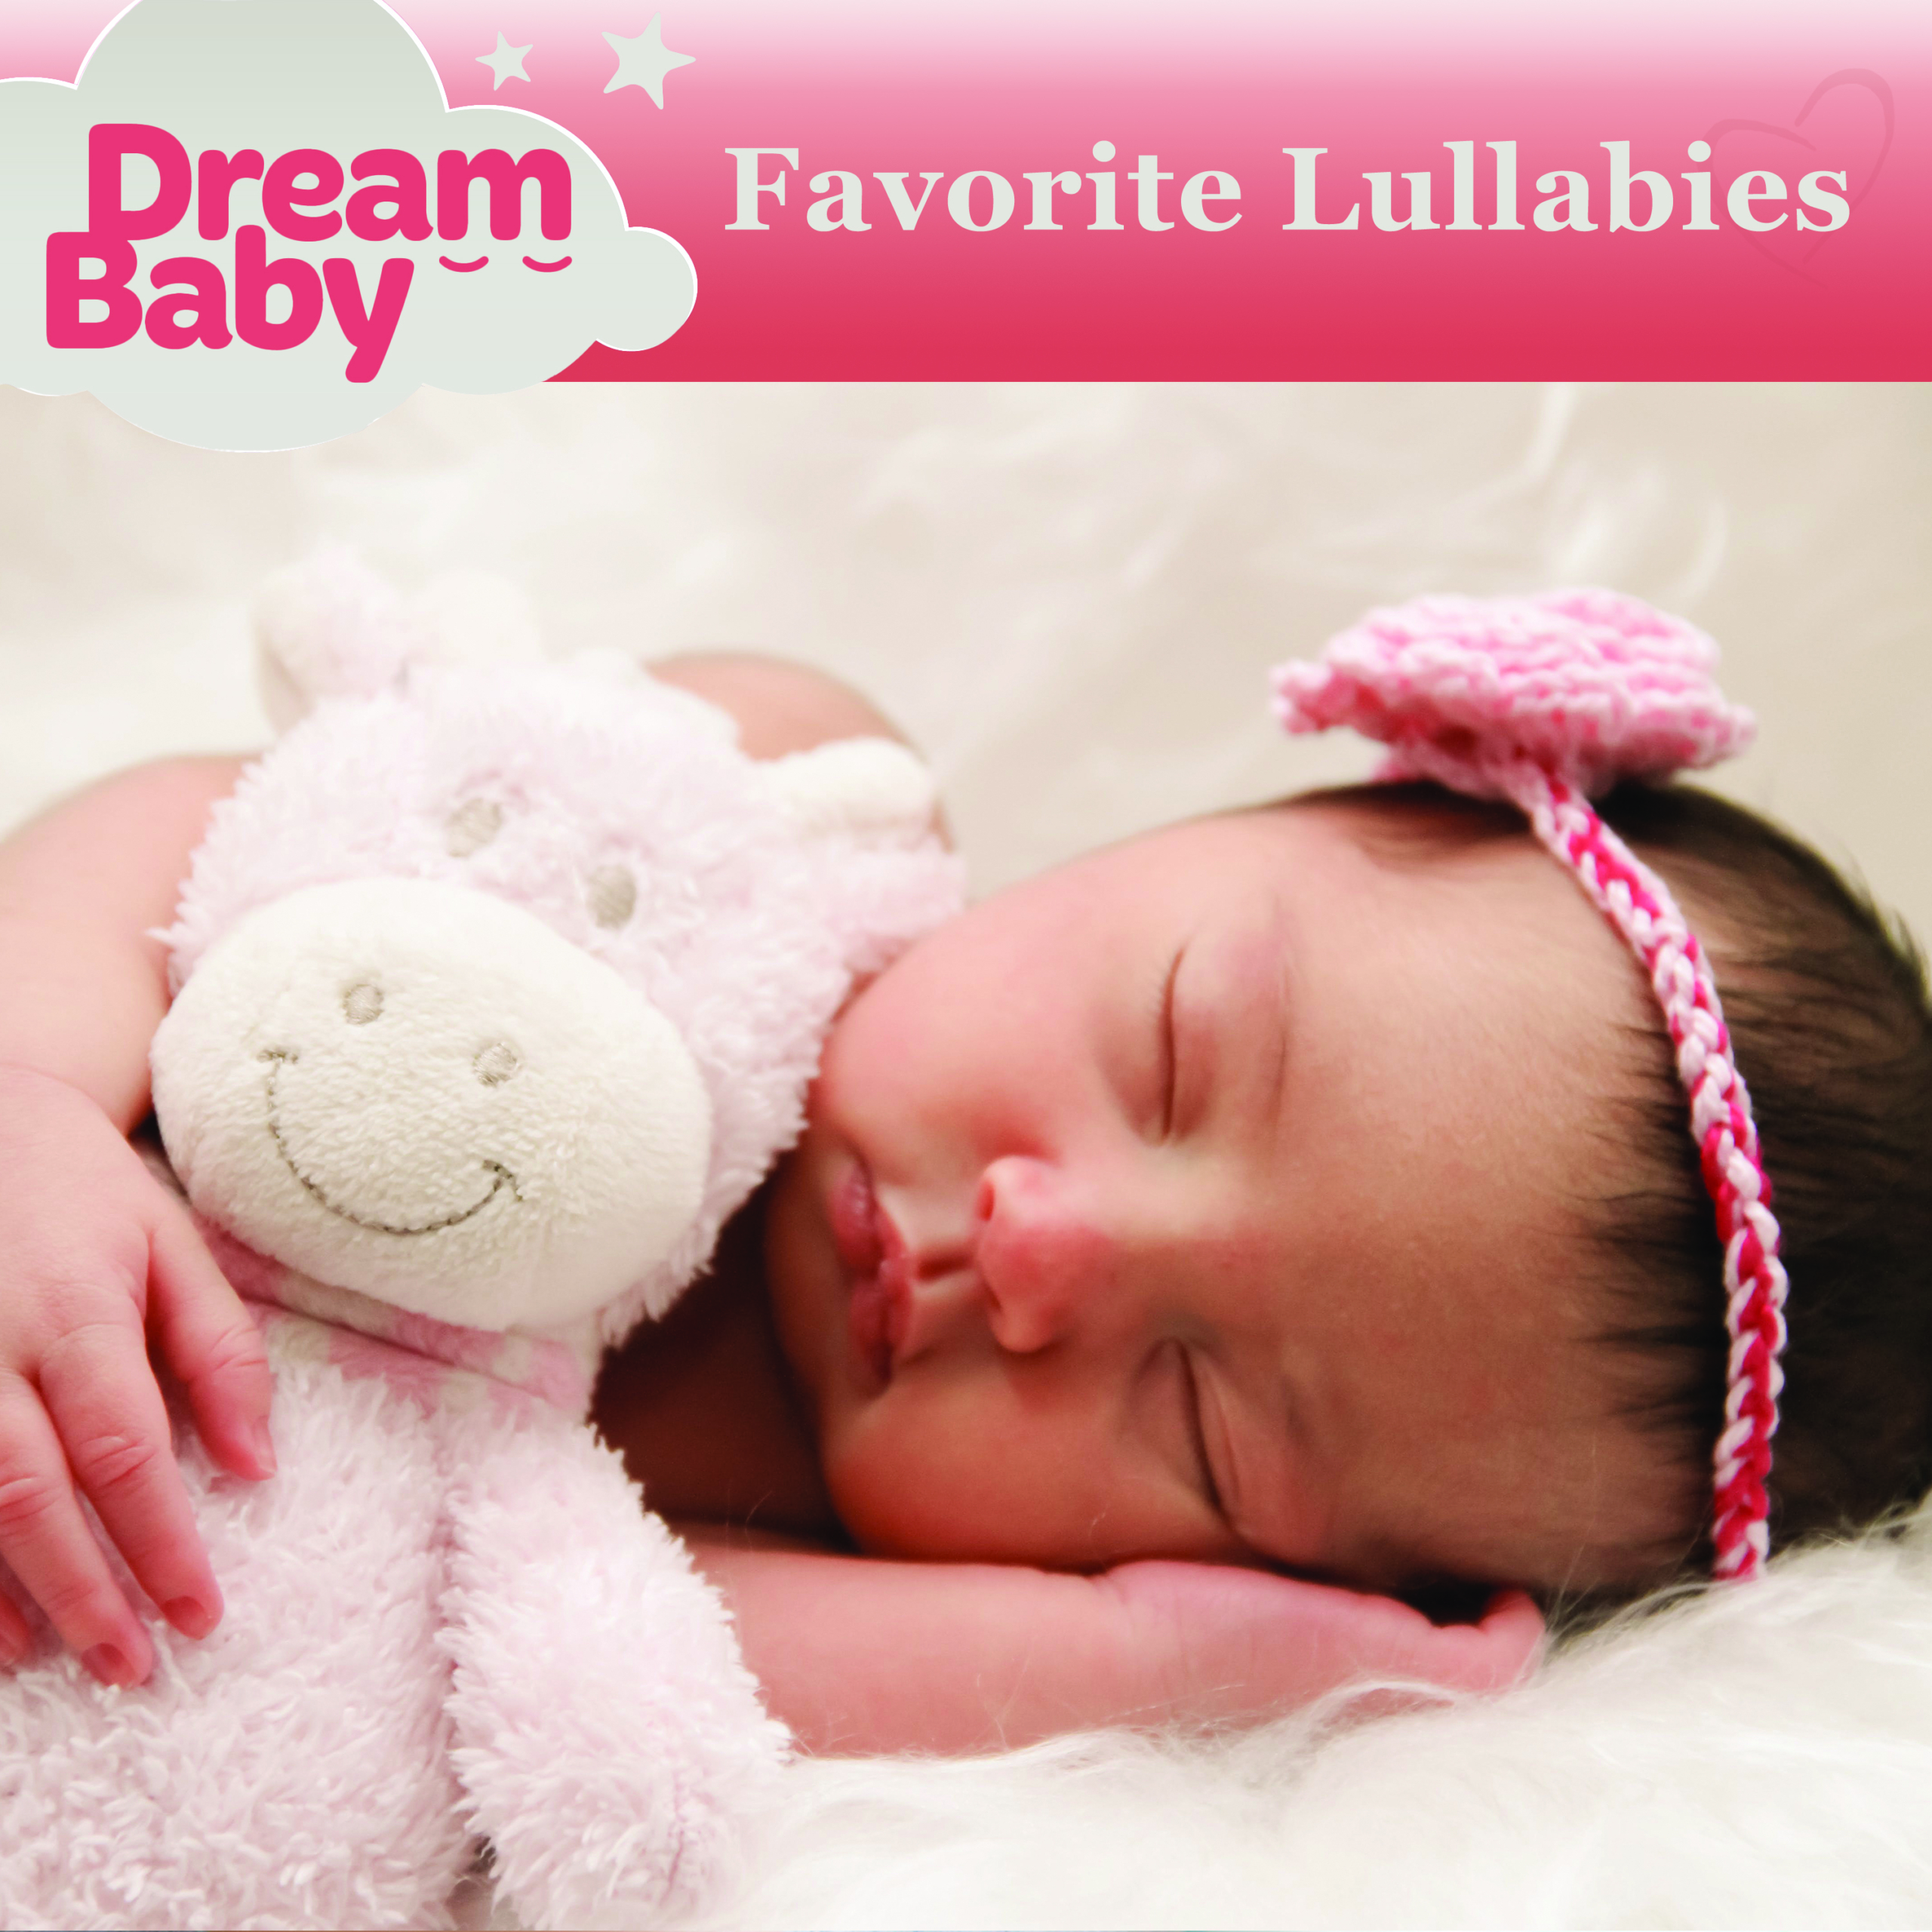 Favourite Lullabies